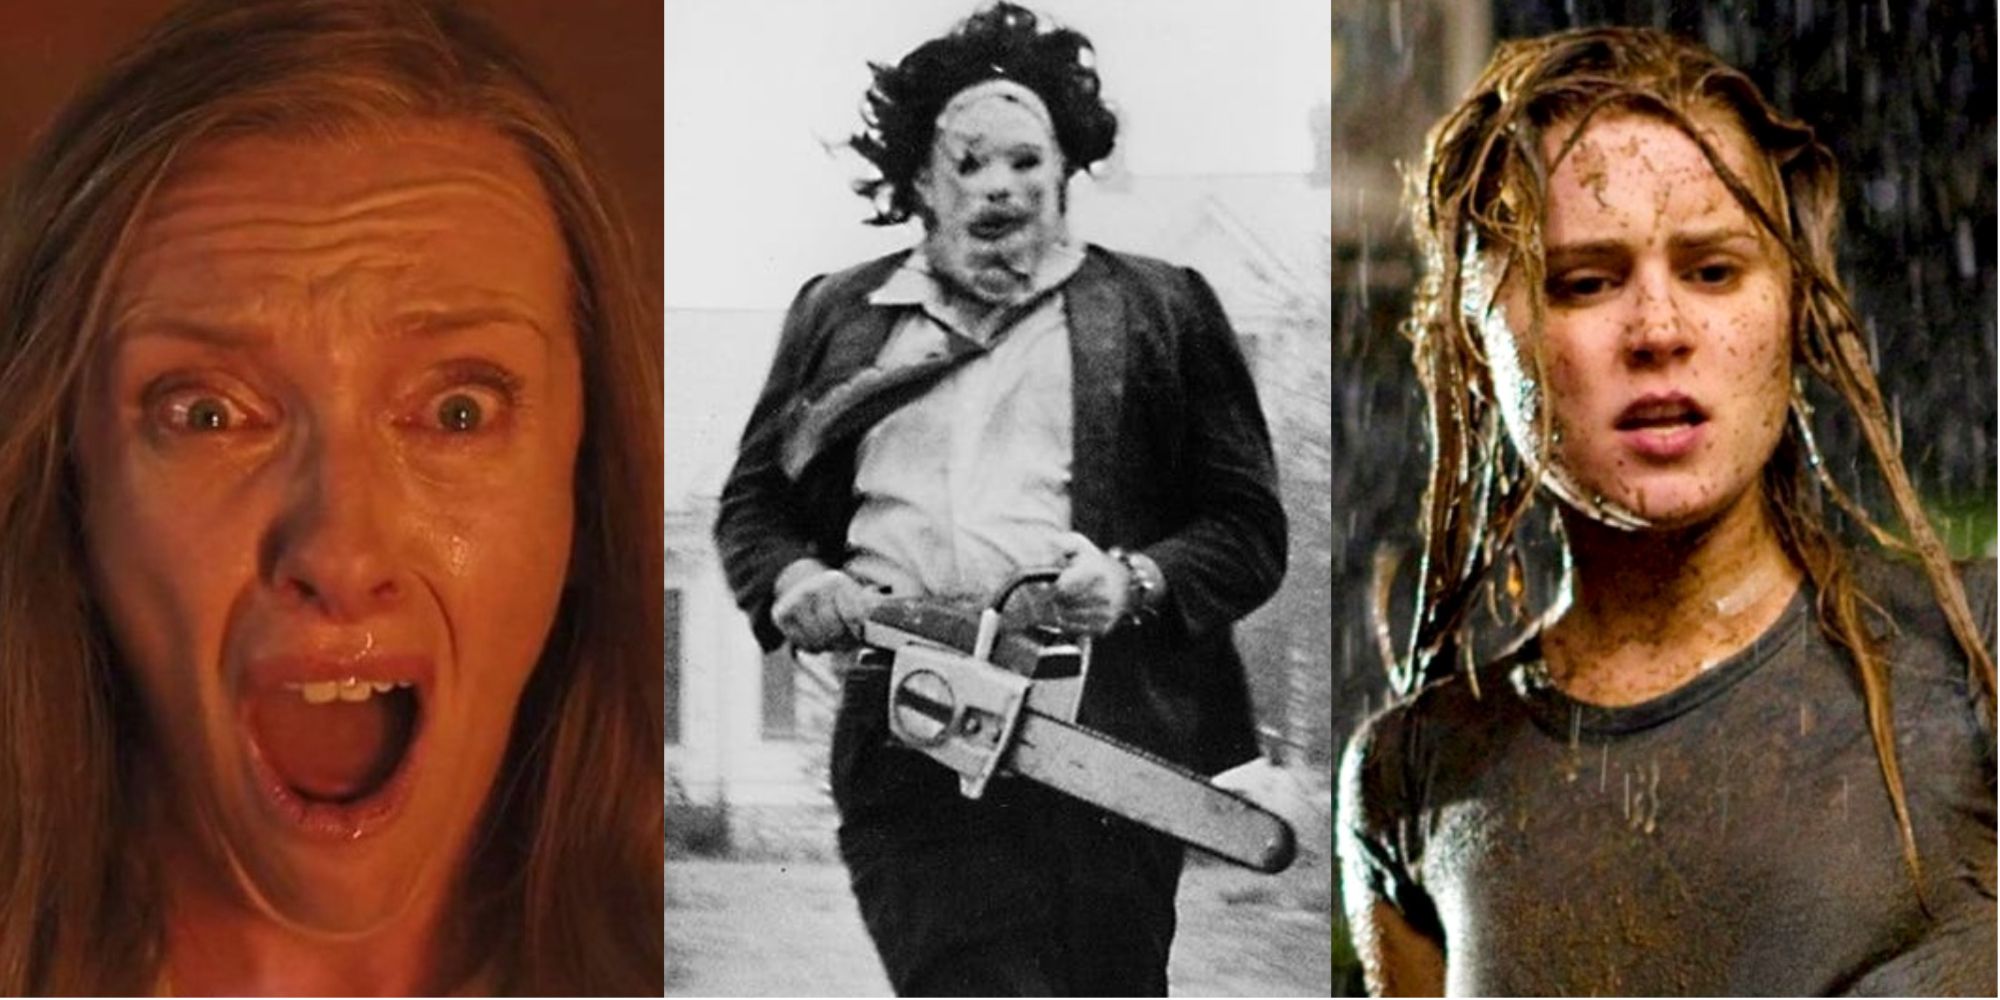 Horror movie characters split image